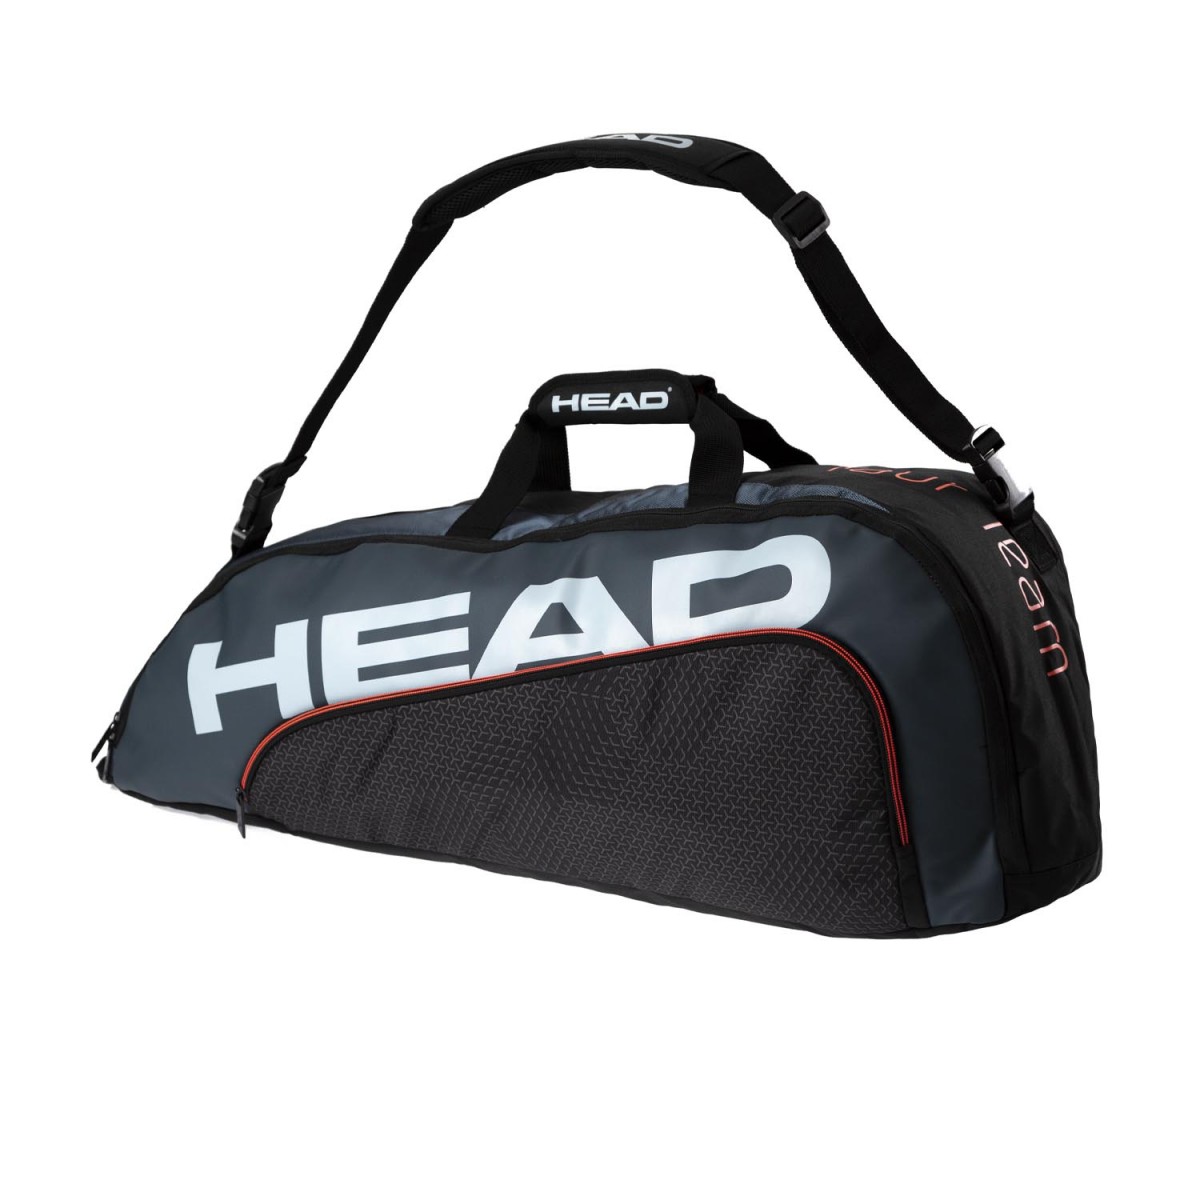 Теннисная сумка Head Tour Team 6R Combi black/grey